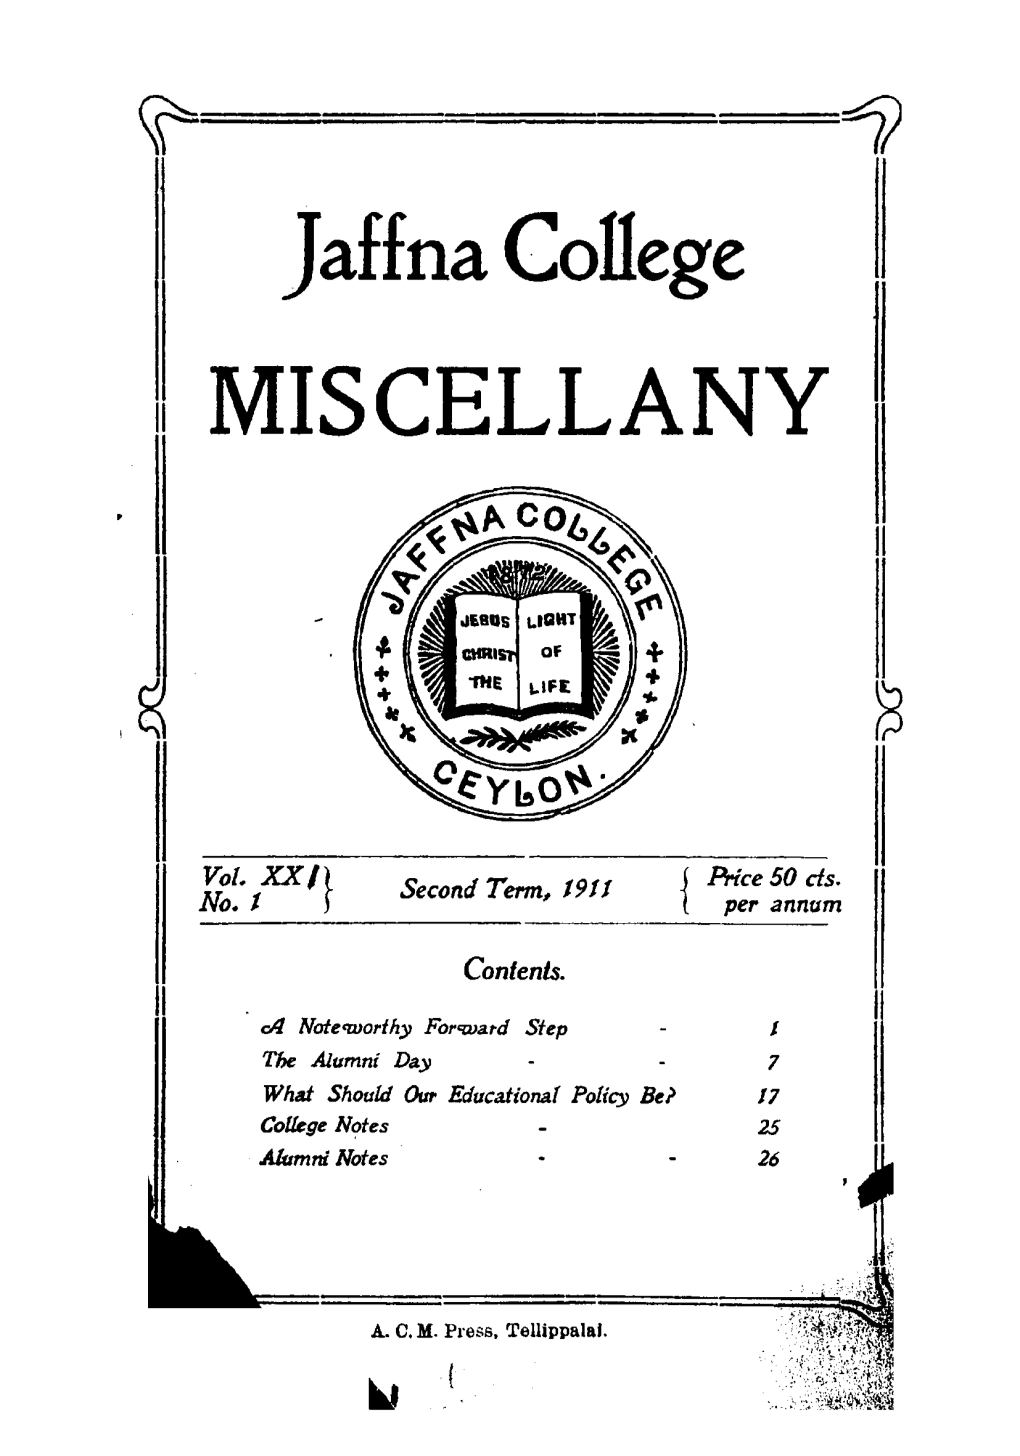 Jaffna College